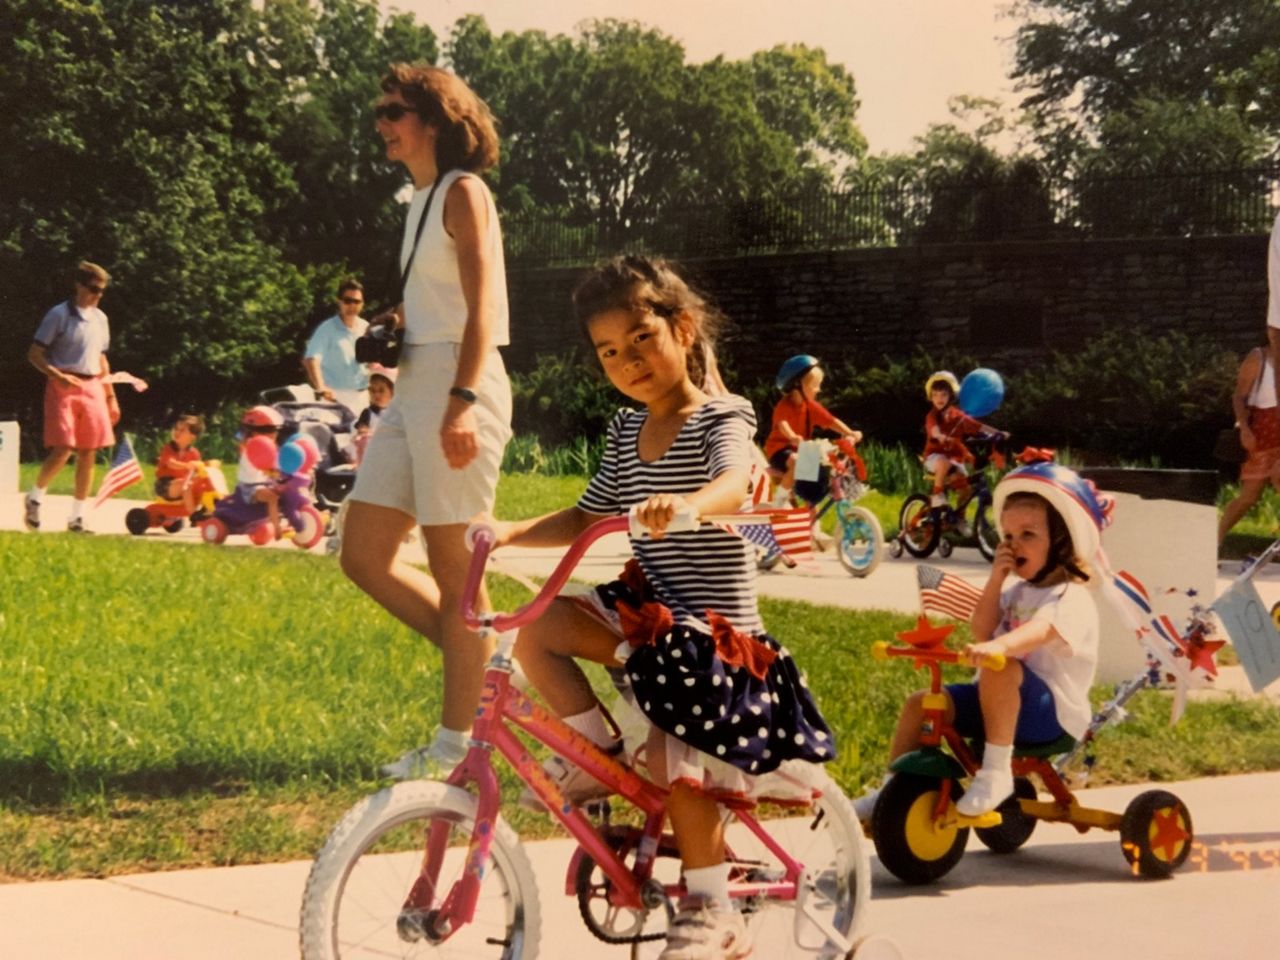 Jenna Weber rides her bike during a Fourth of July celebration at Ault Park in Cincinnati. (Photo courtesy of Jenna Weber)